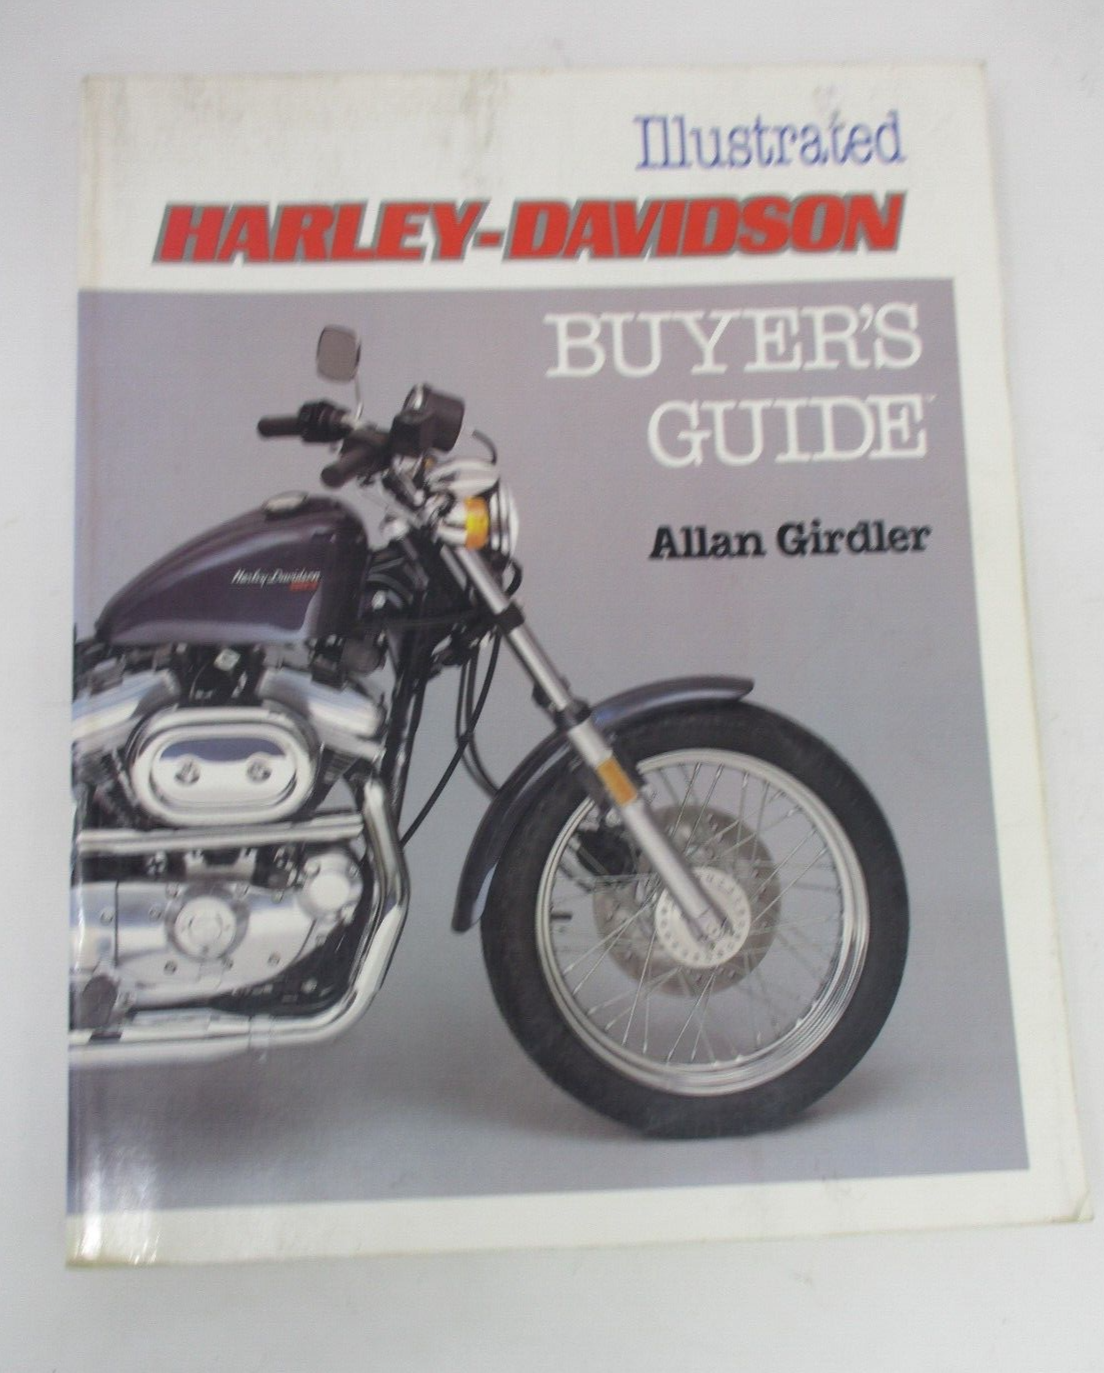 Illustrated Harley Davidson Buyer's Guide Allan Girder ISBN 0-87938-207-4